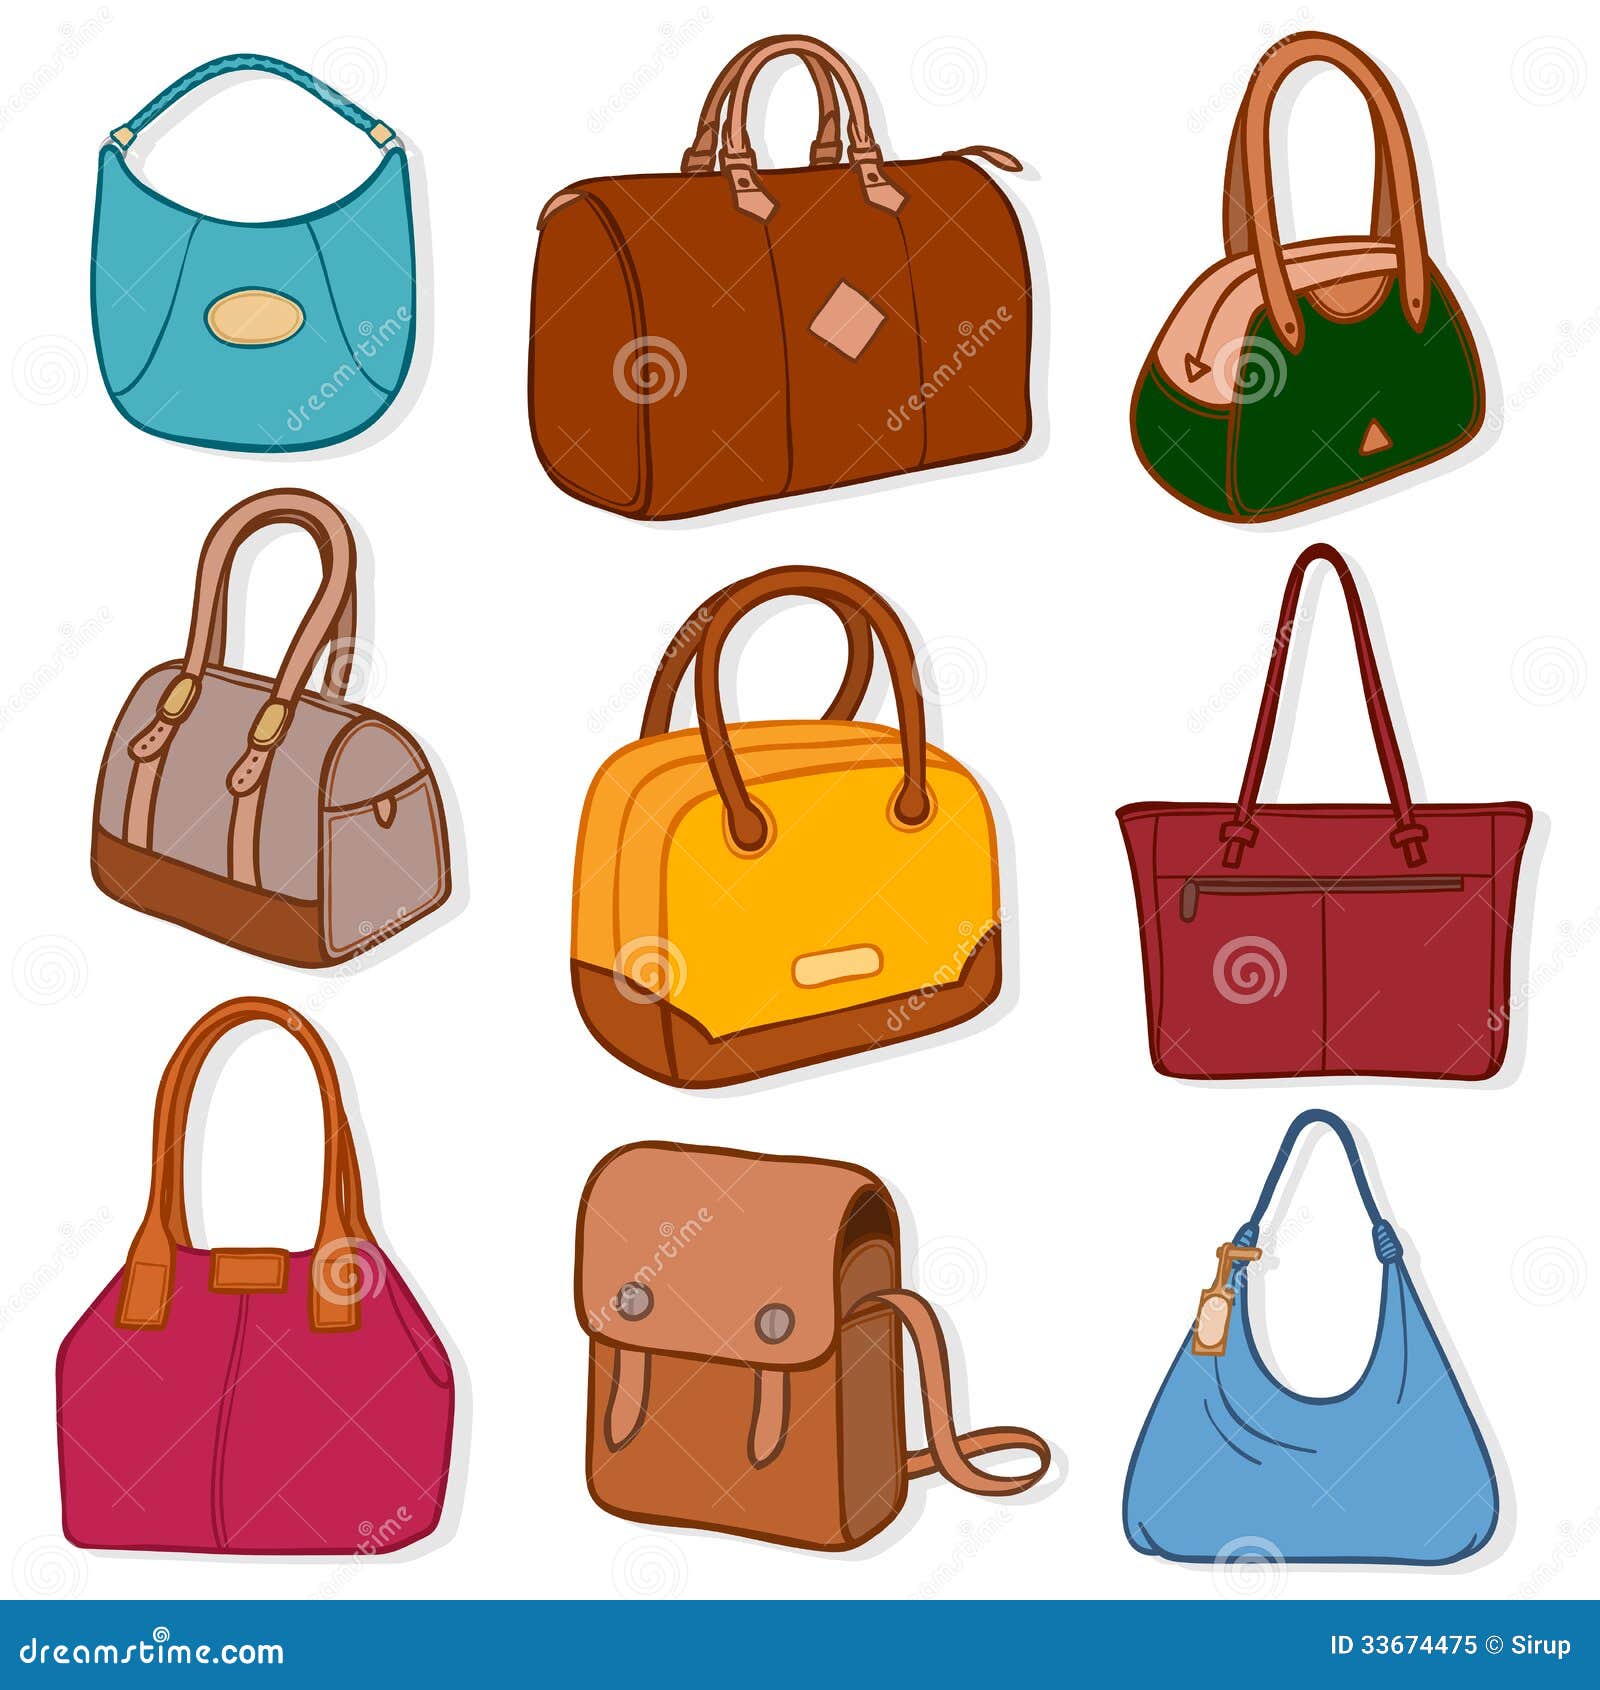 Tassonomia delle borse - Bags taxonomy | Purse styles, Types of purses, Bags